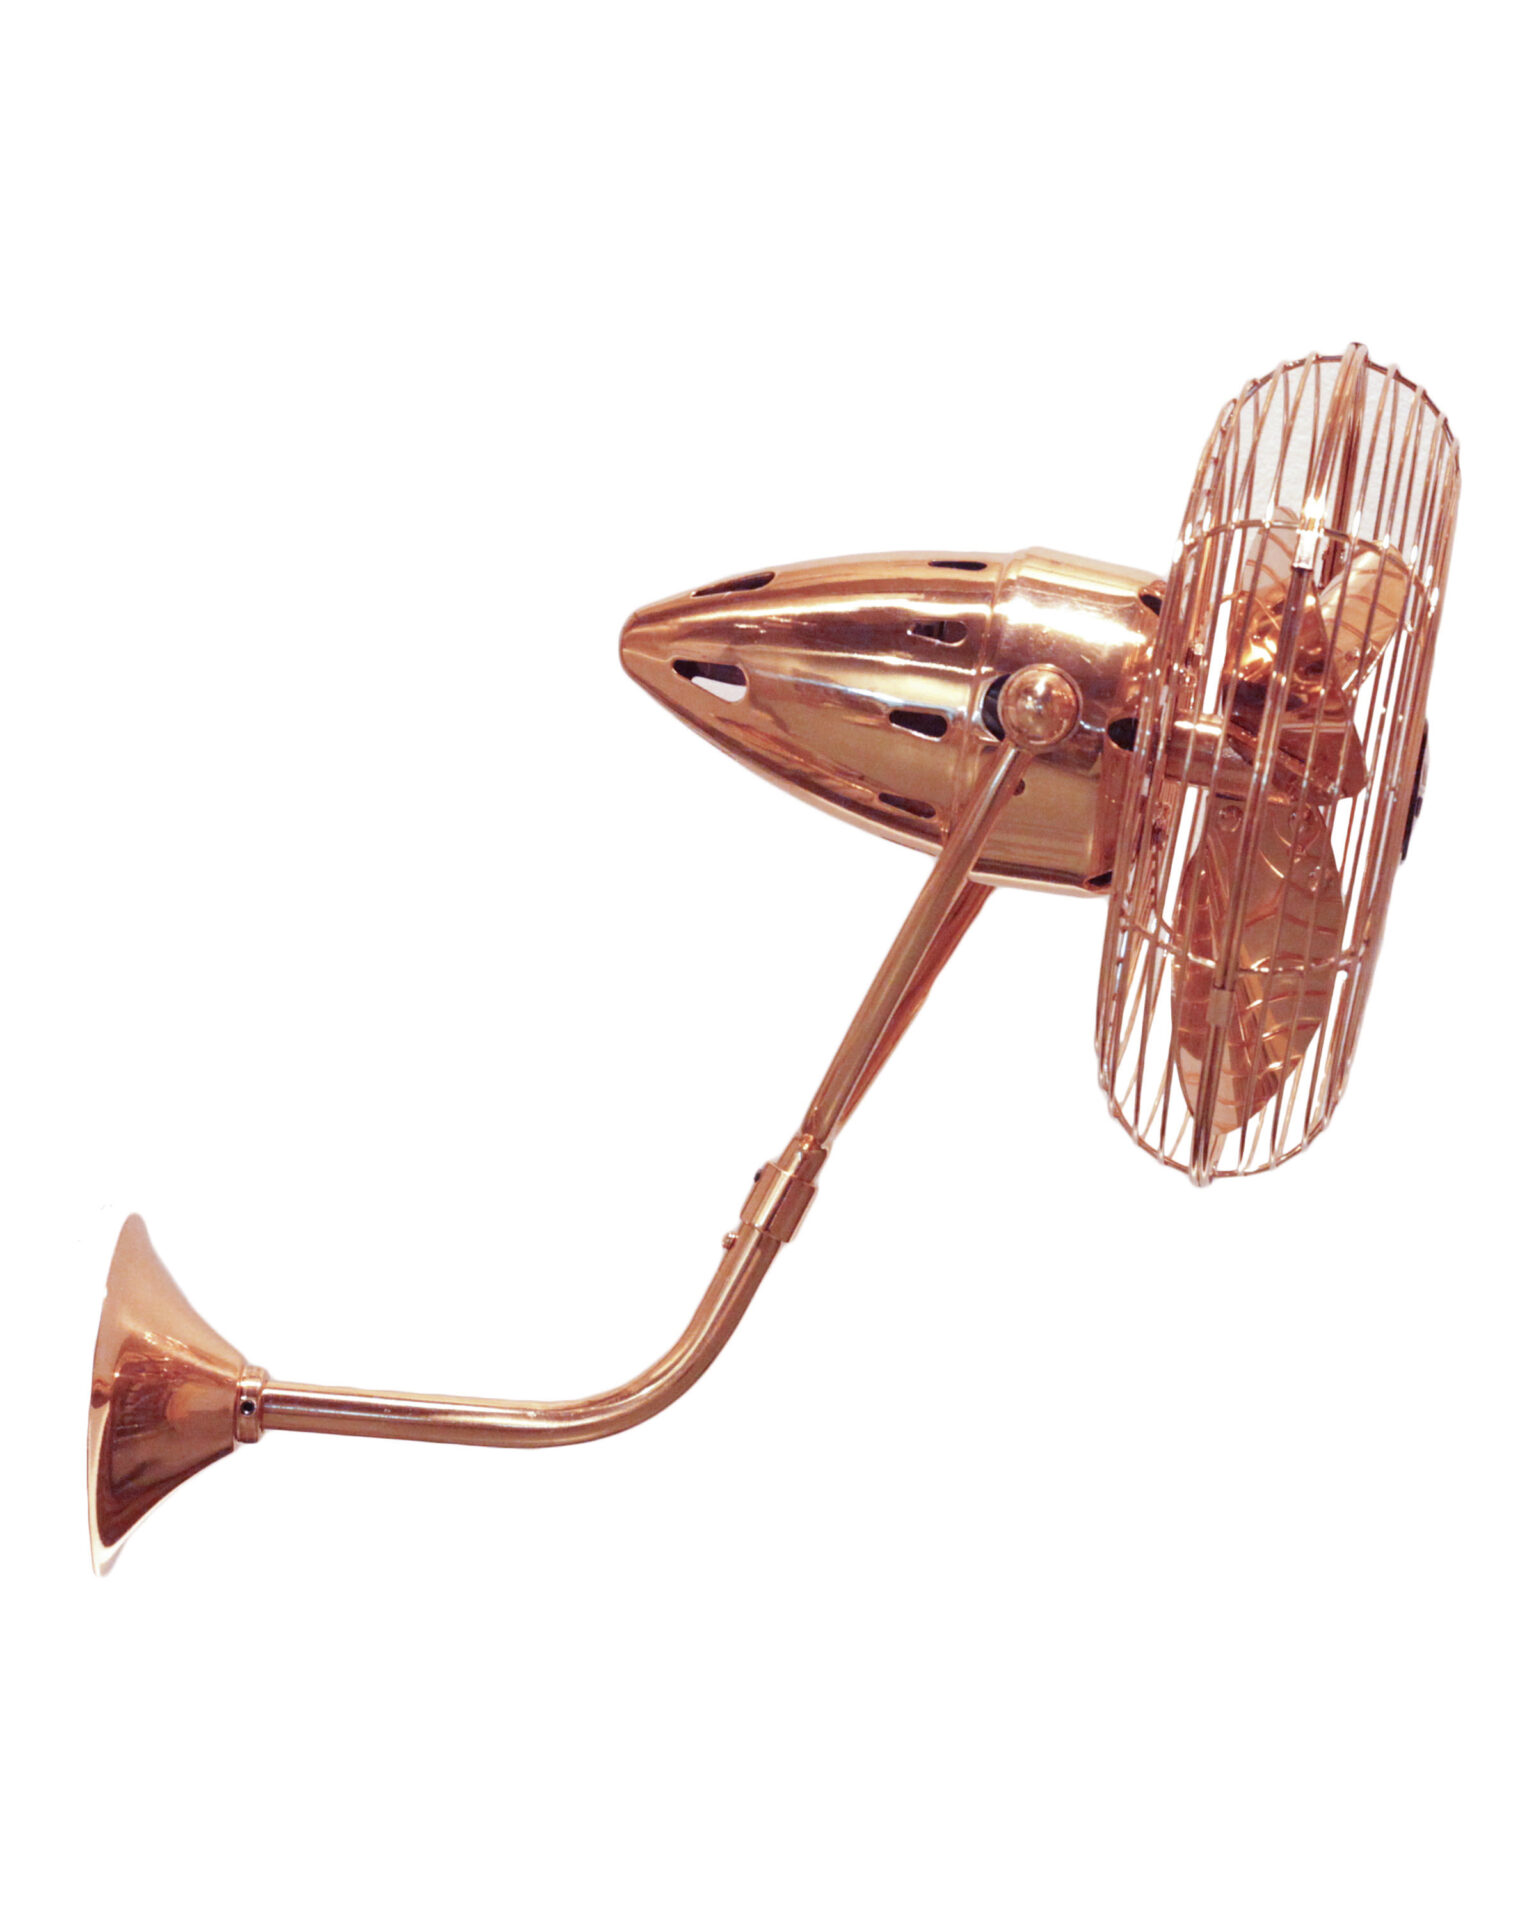 Bruna Parede Wall Fan in Polished Copper Finish Made by Matthews Fan Company